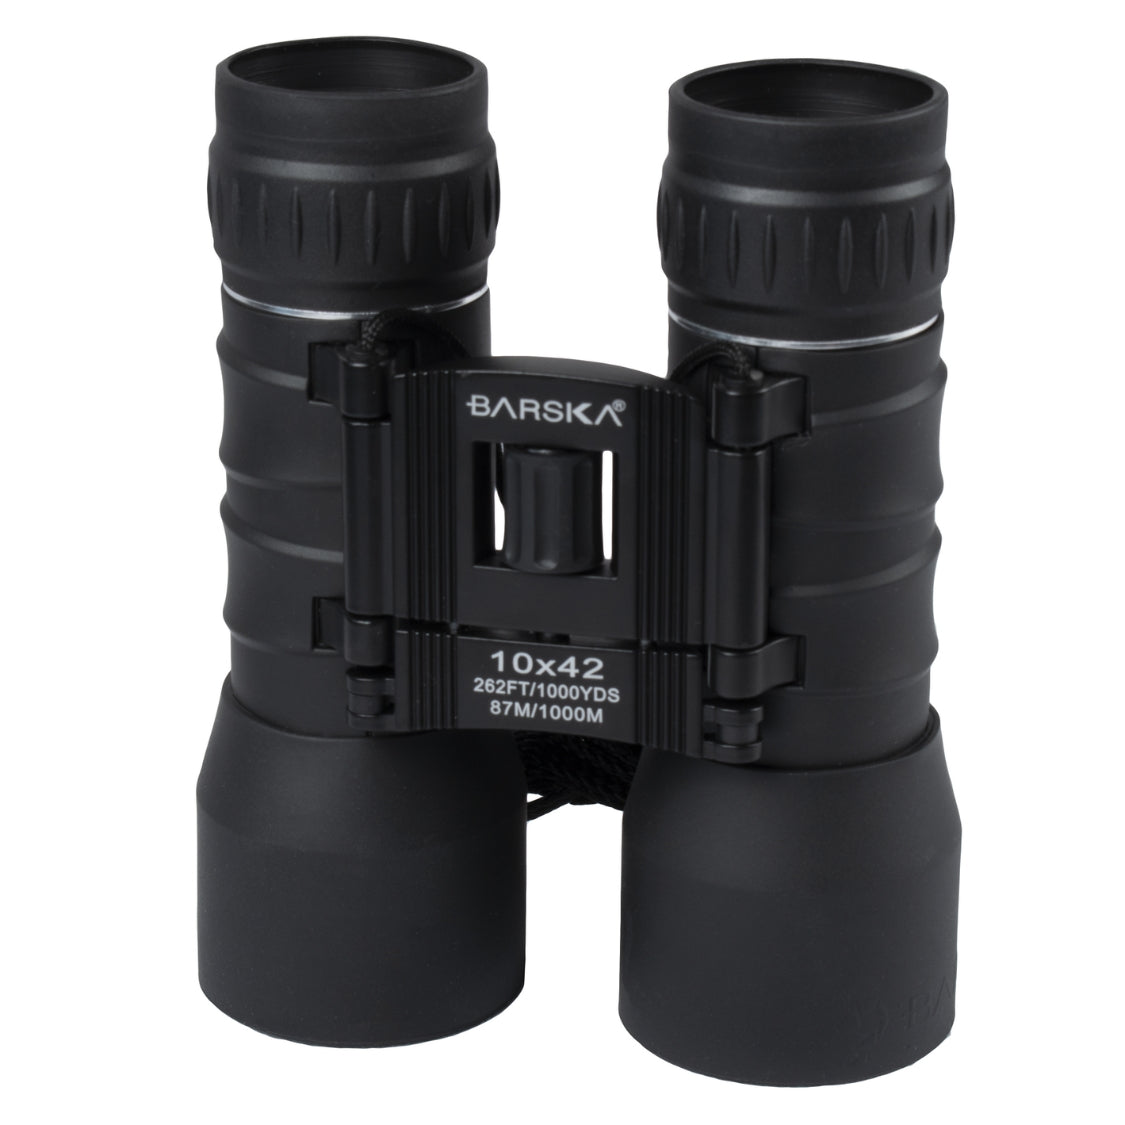 Barska 10x42mm Lucid View Compact Binoculars AB11364